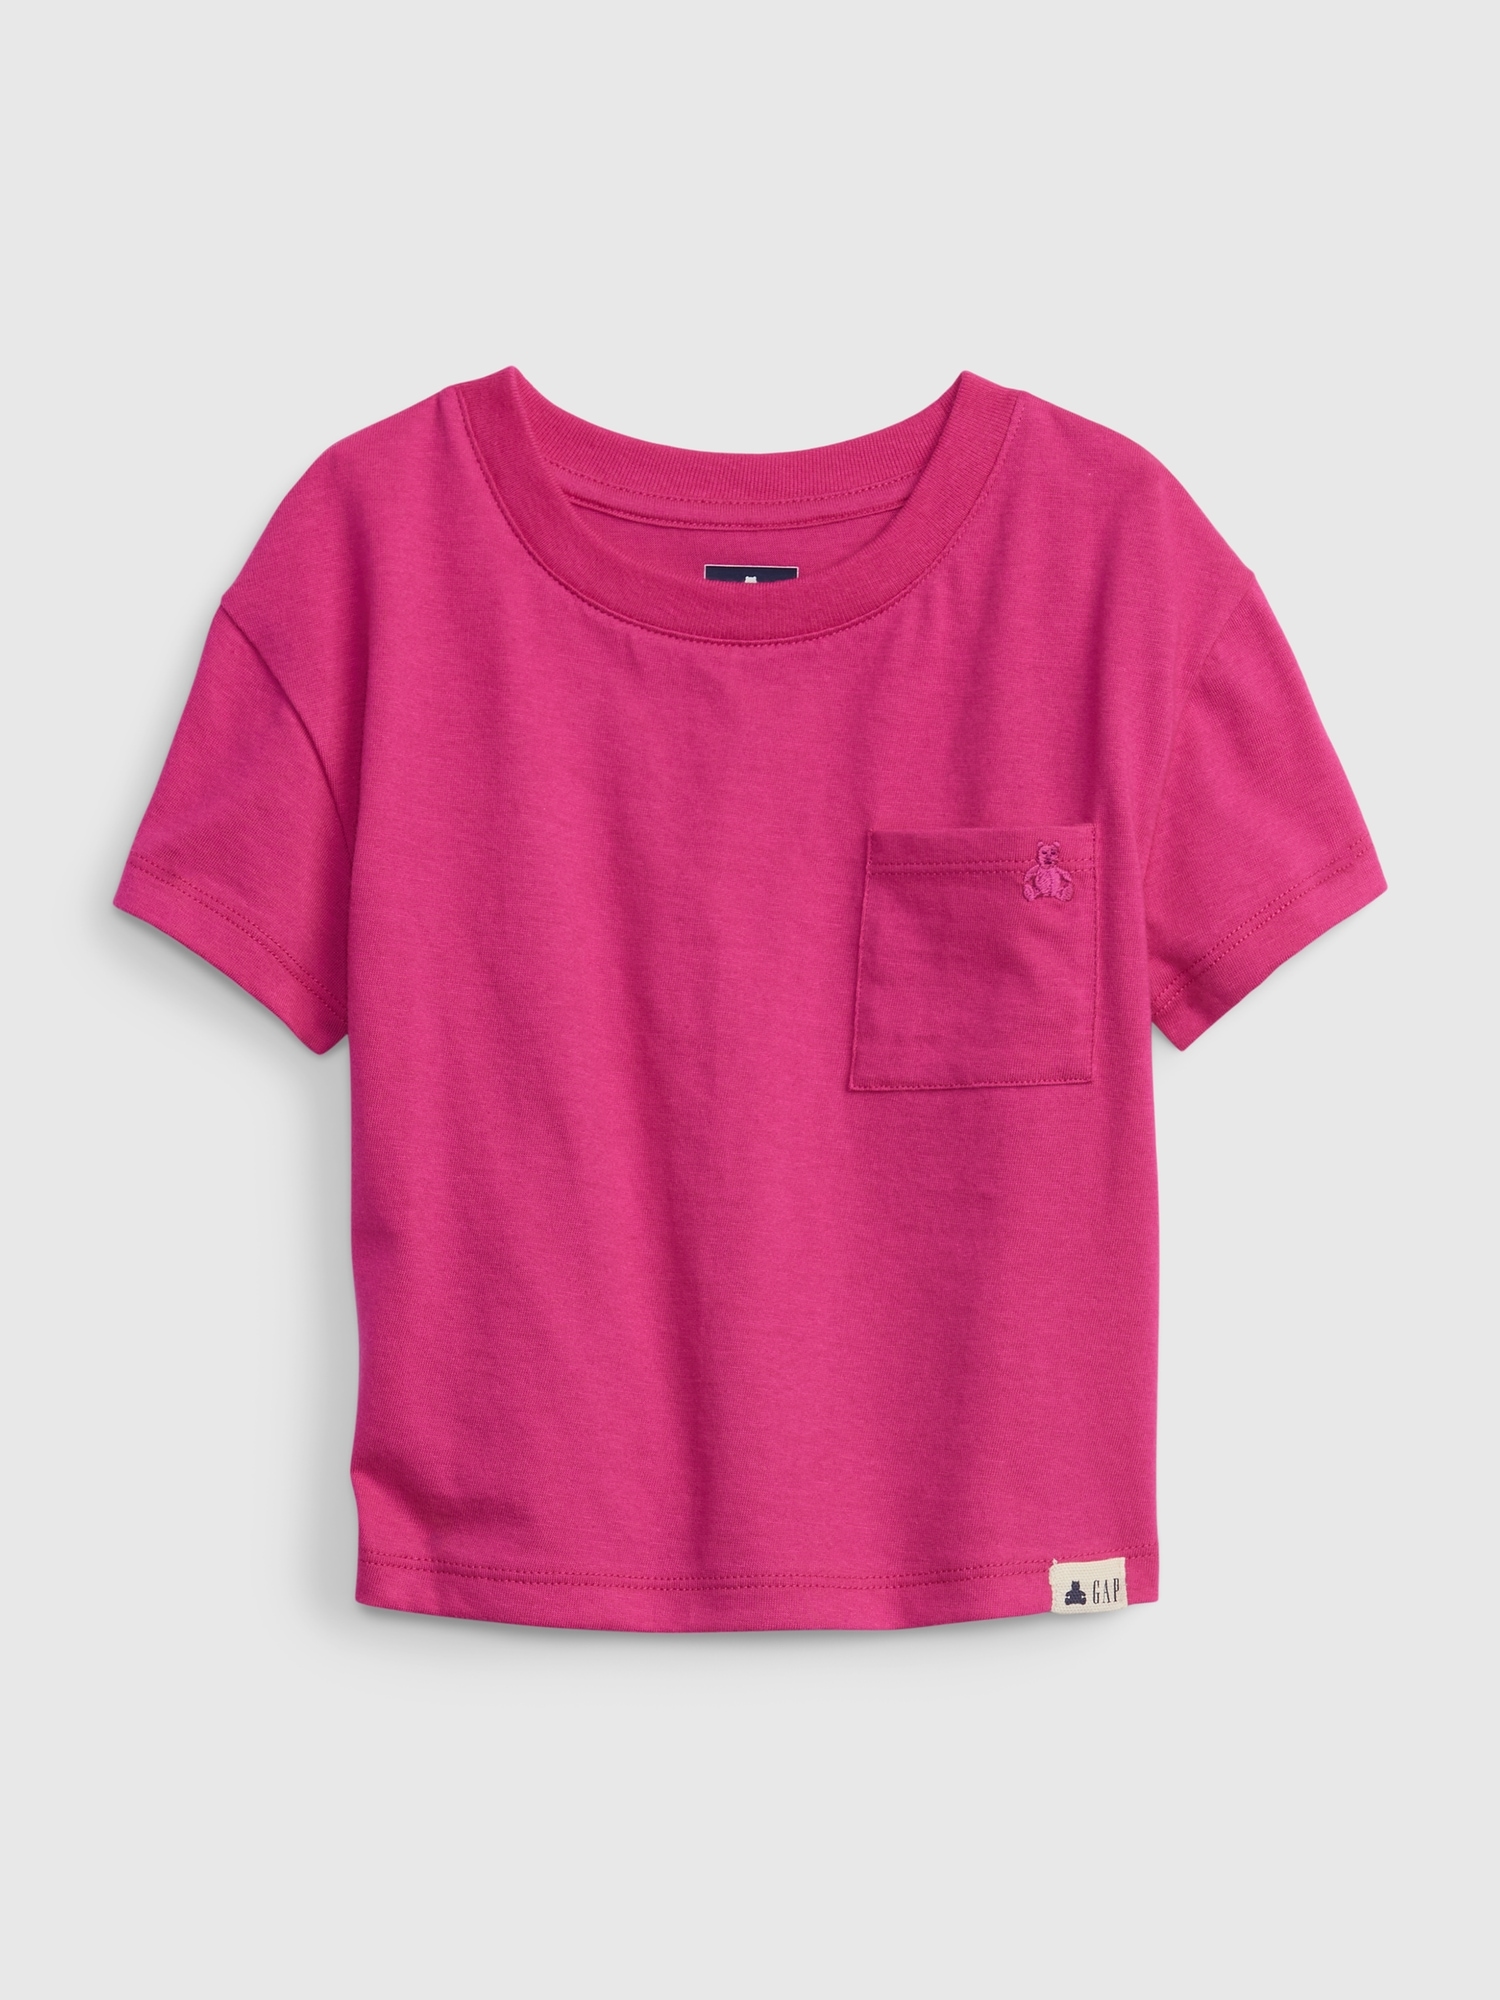 Toddler Organic Cotton Mix and Match Pocket T-Shirt | Gap